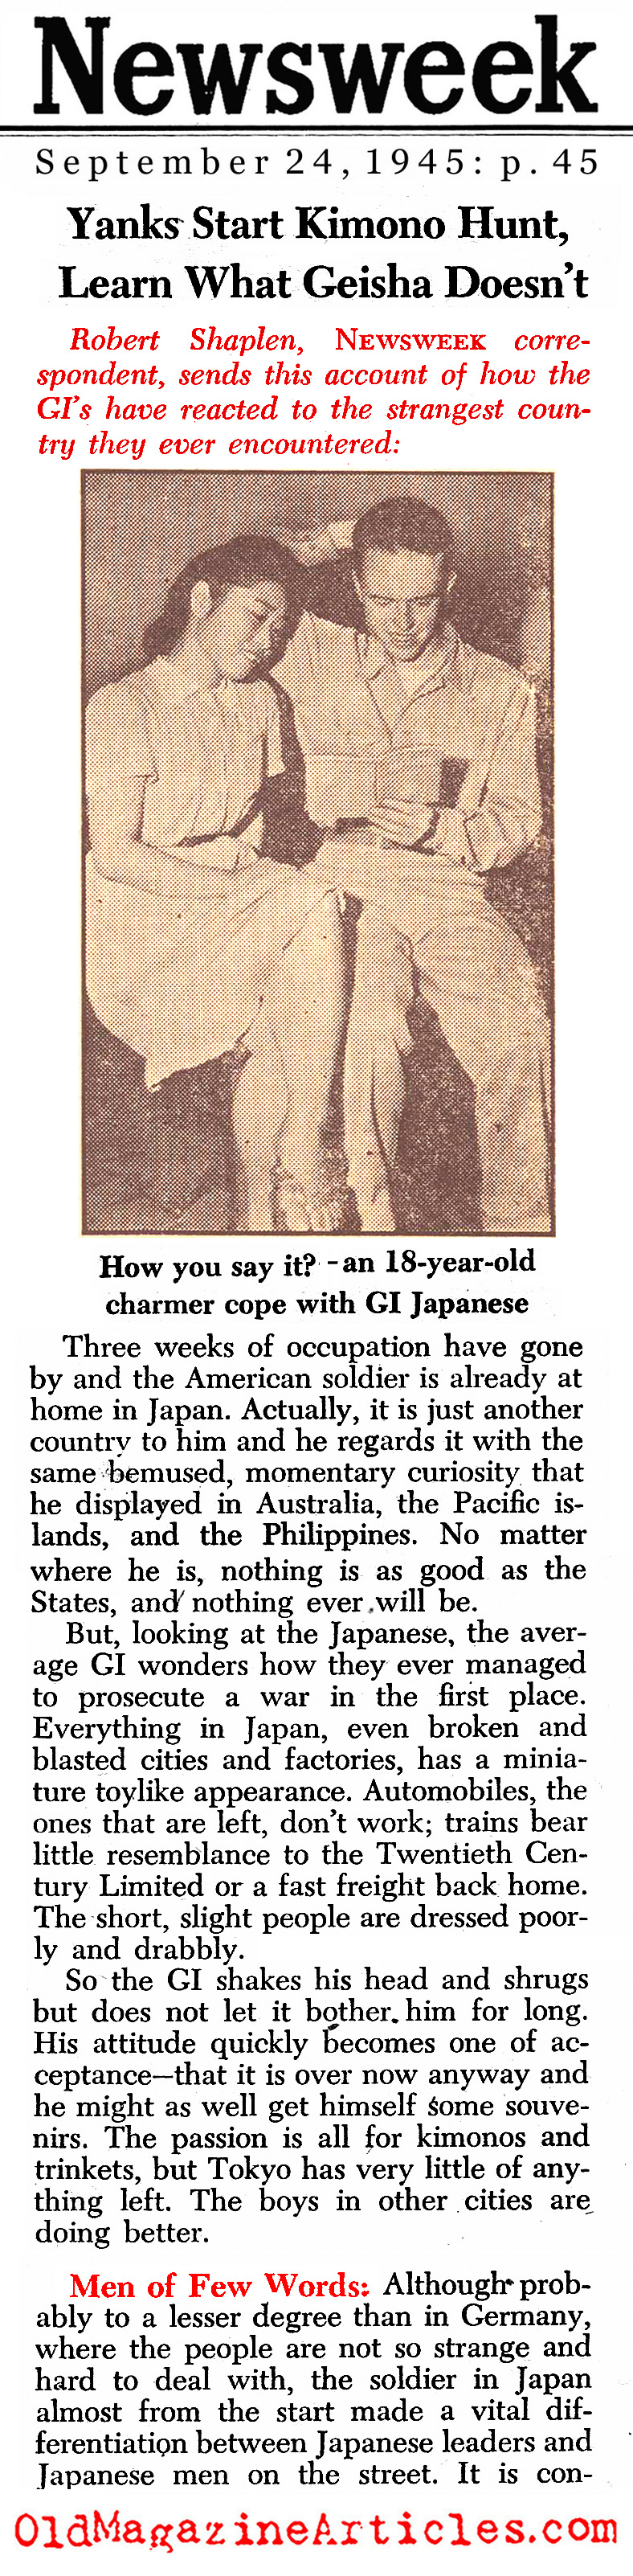 A GI View of Japan (Newsweek Magazine, 1945)